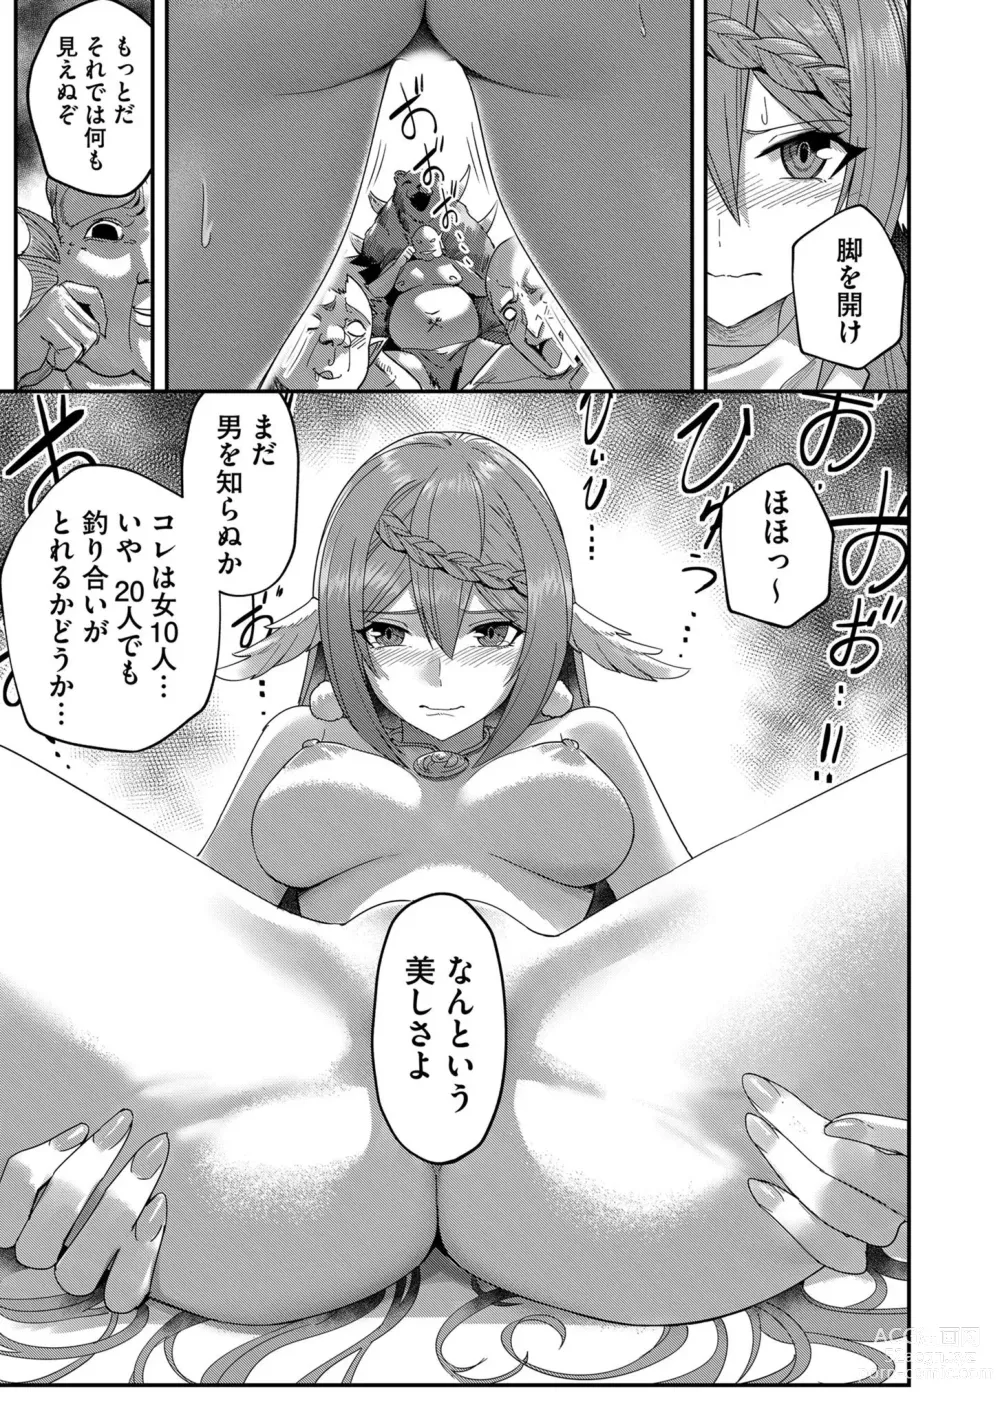 Page 173 of manga Kichiku Eiyuu Vol.01